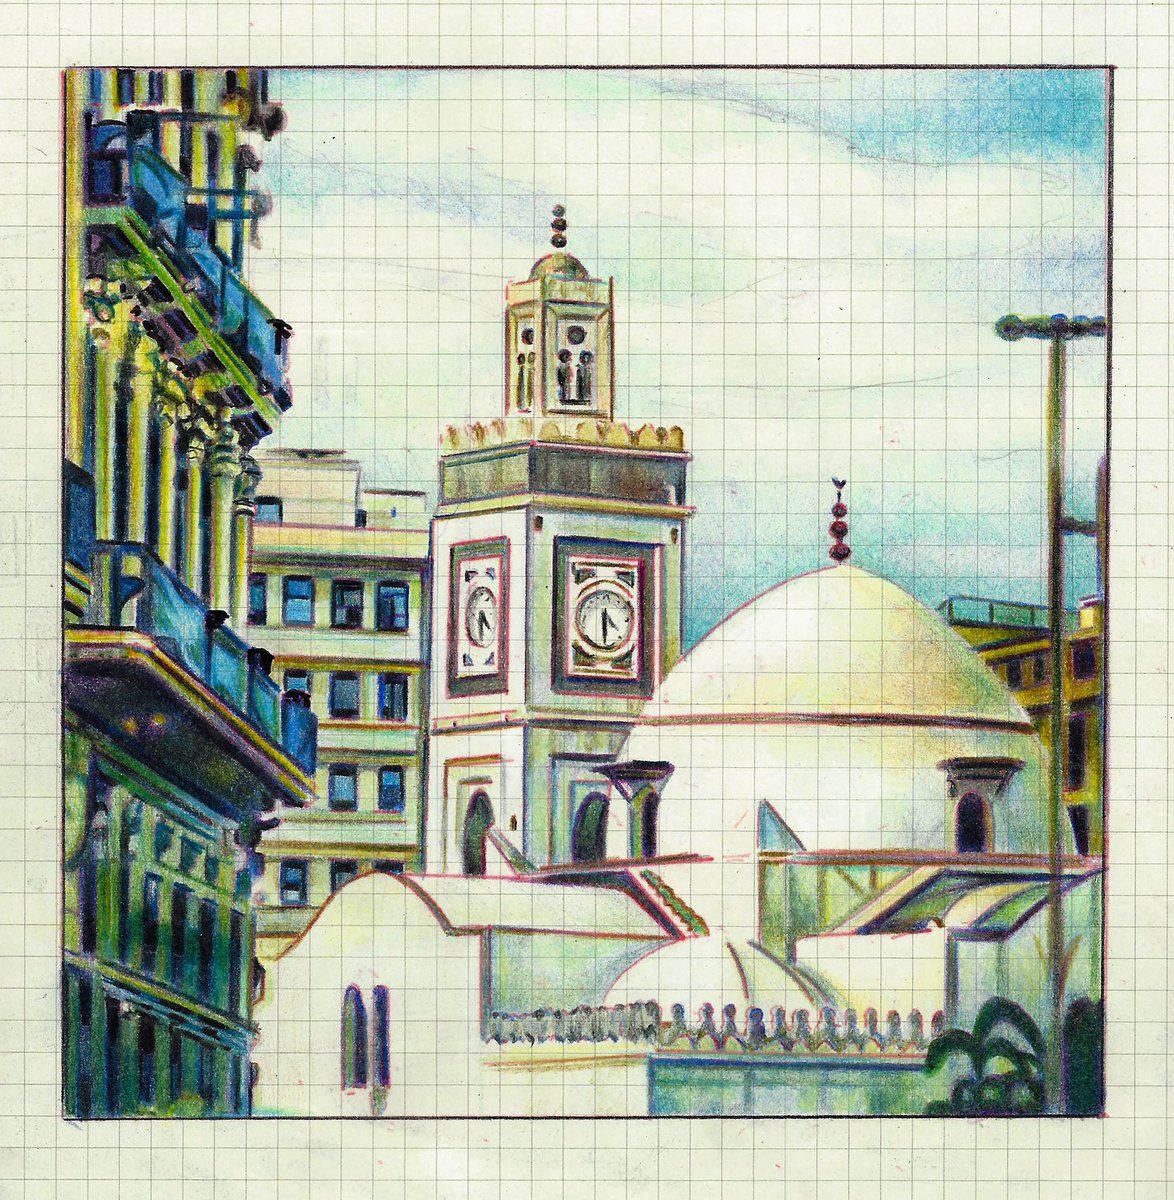 4-Color Bic Pen Sketches on Graph Paper., #sketchbook #sketch #Bic #bicpenart #illustration #illustrationoftheday #algiers